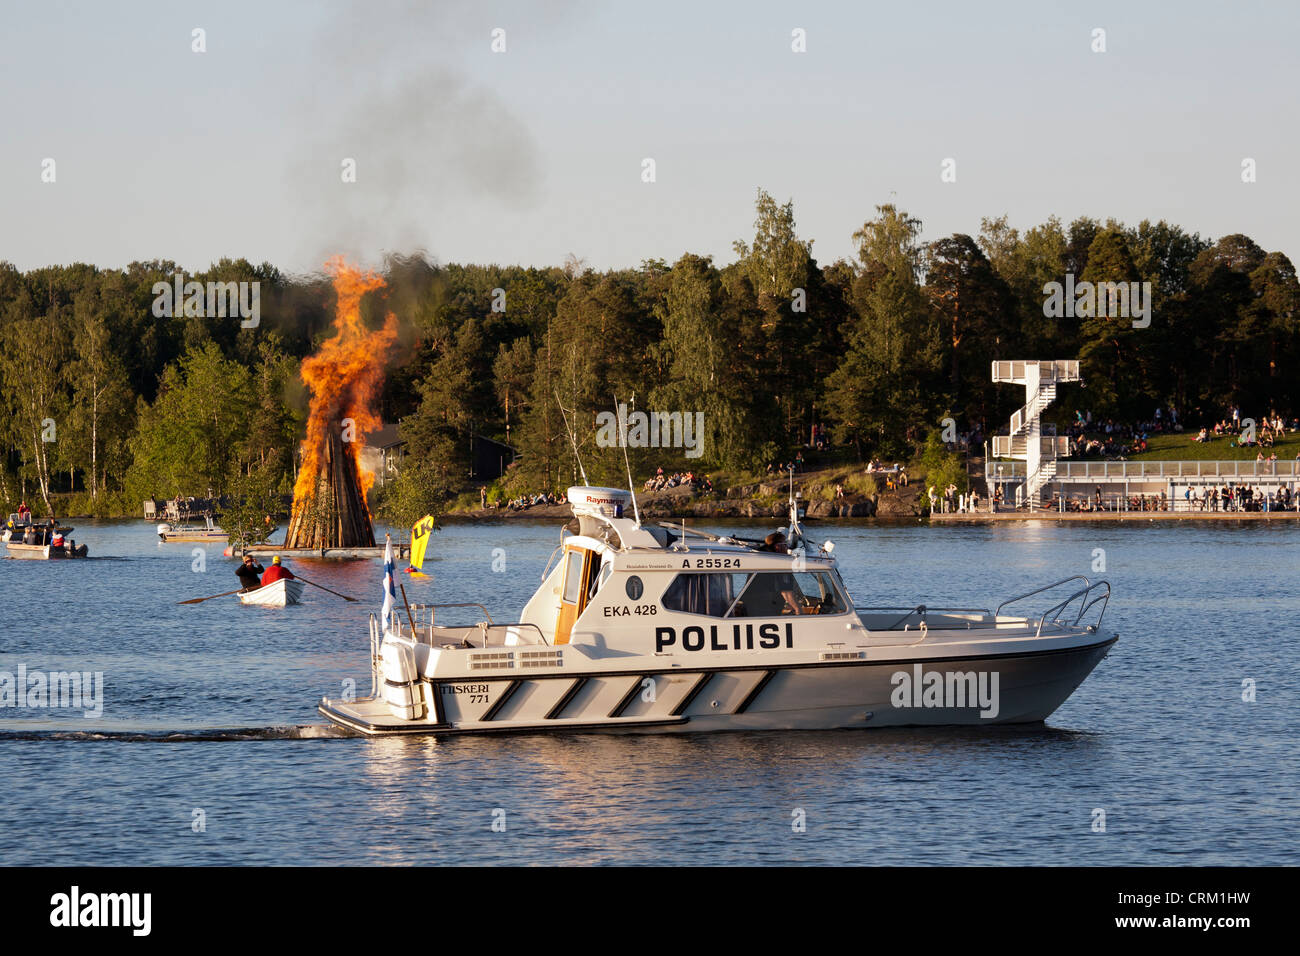 Police boat with Midsummer bonfire, Lappeenranta Finland Stock Photo